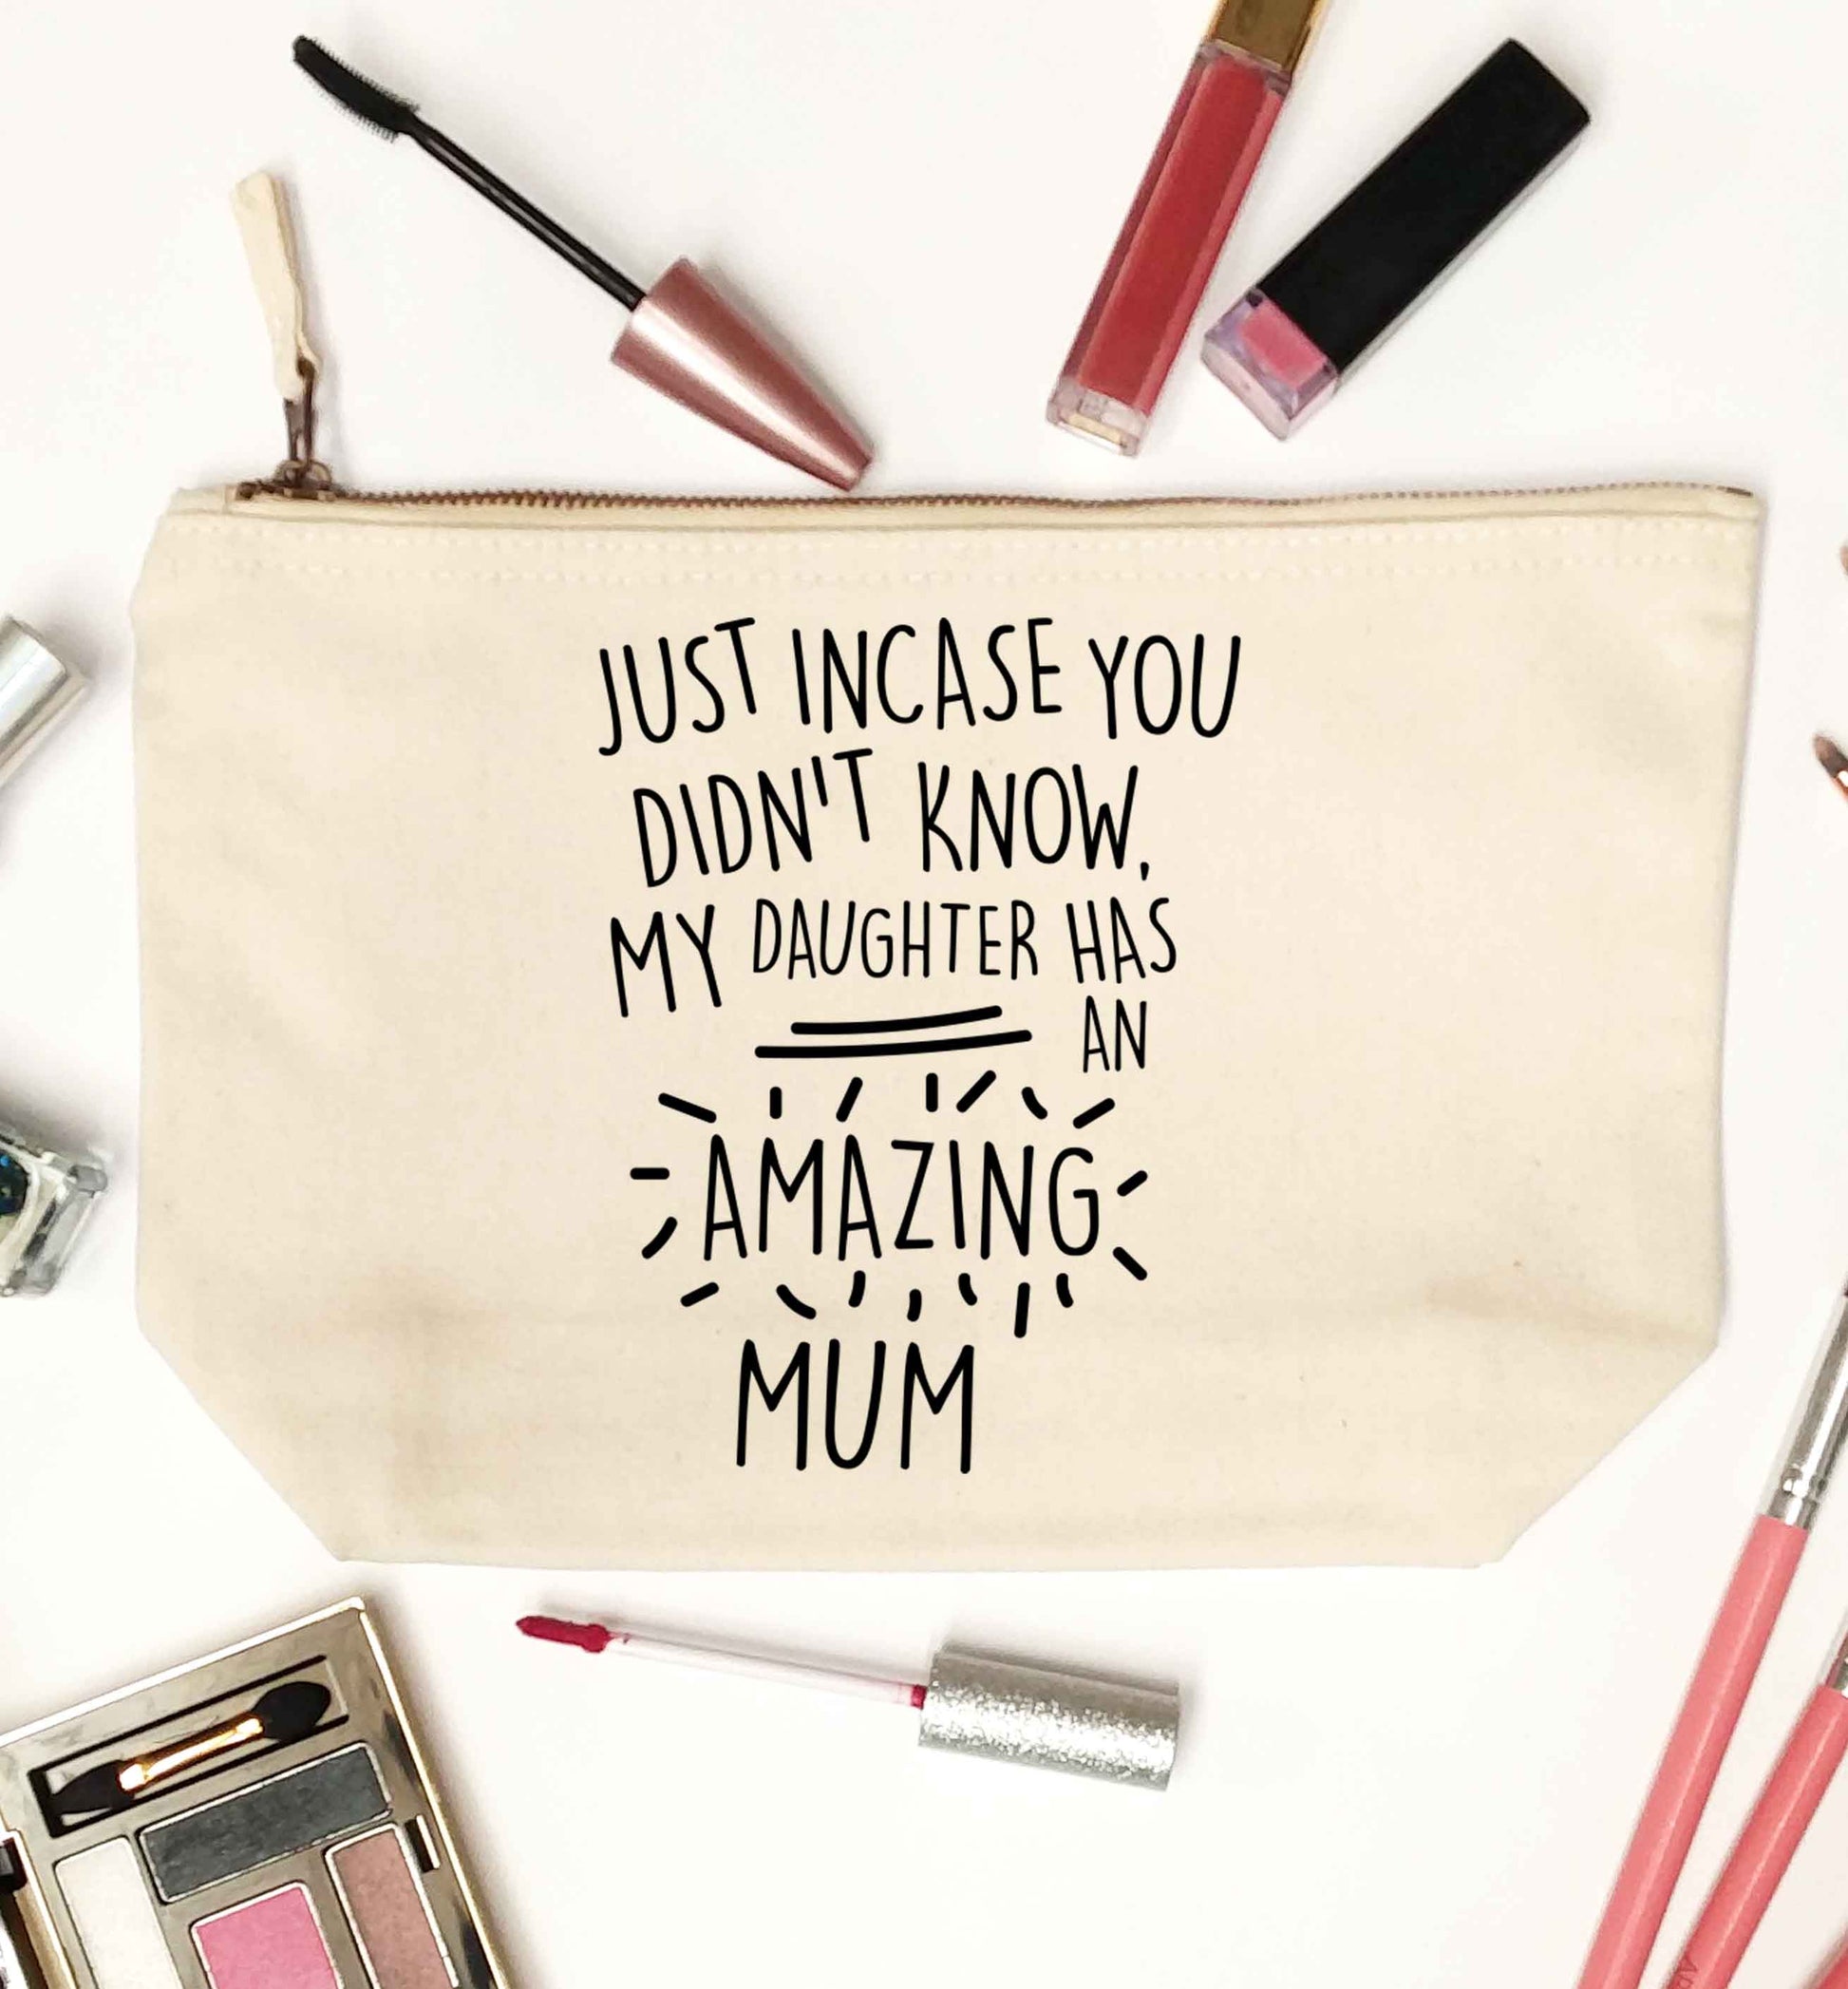 Just incase you didn't know my daughter has an amazing mum natural makeup bag